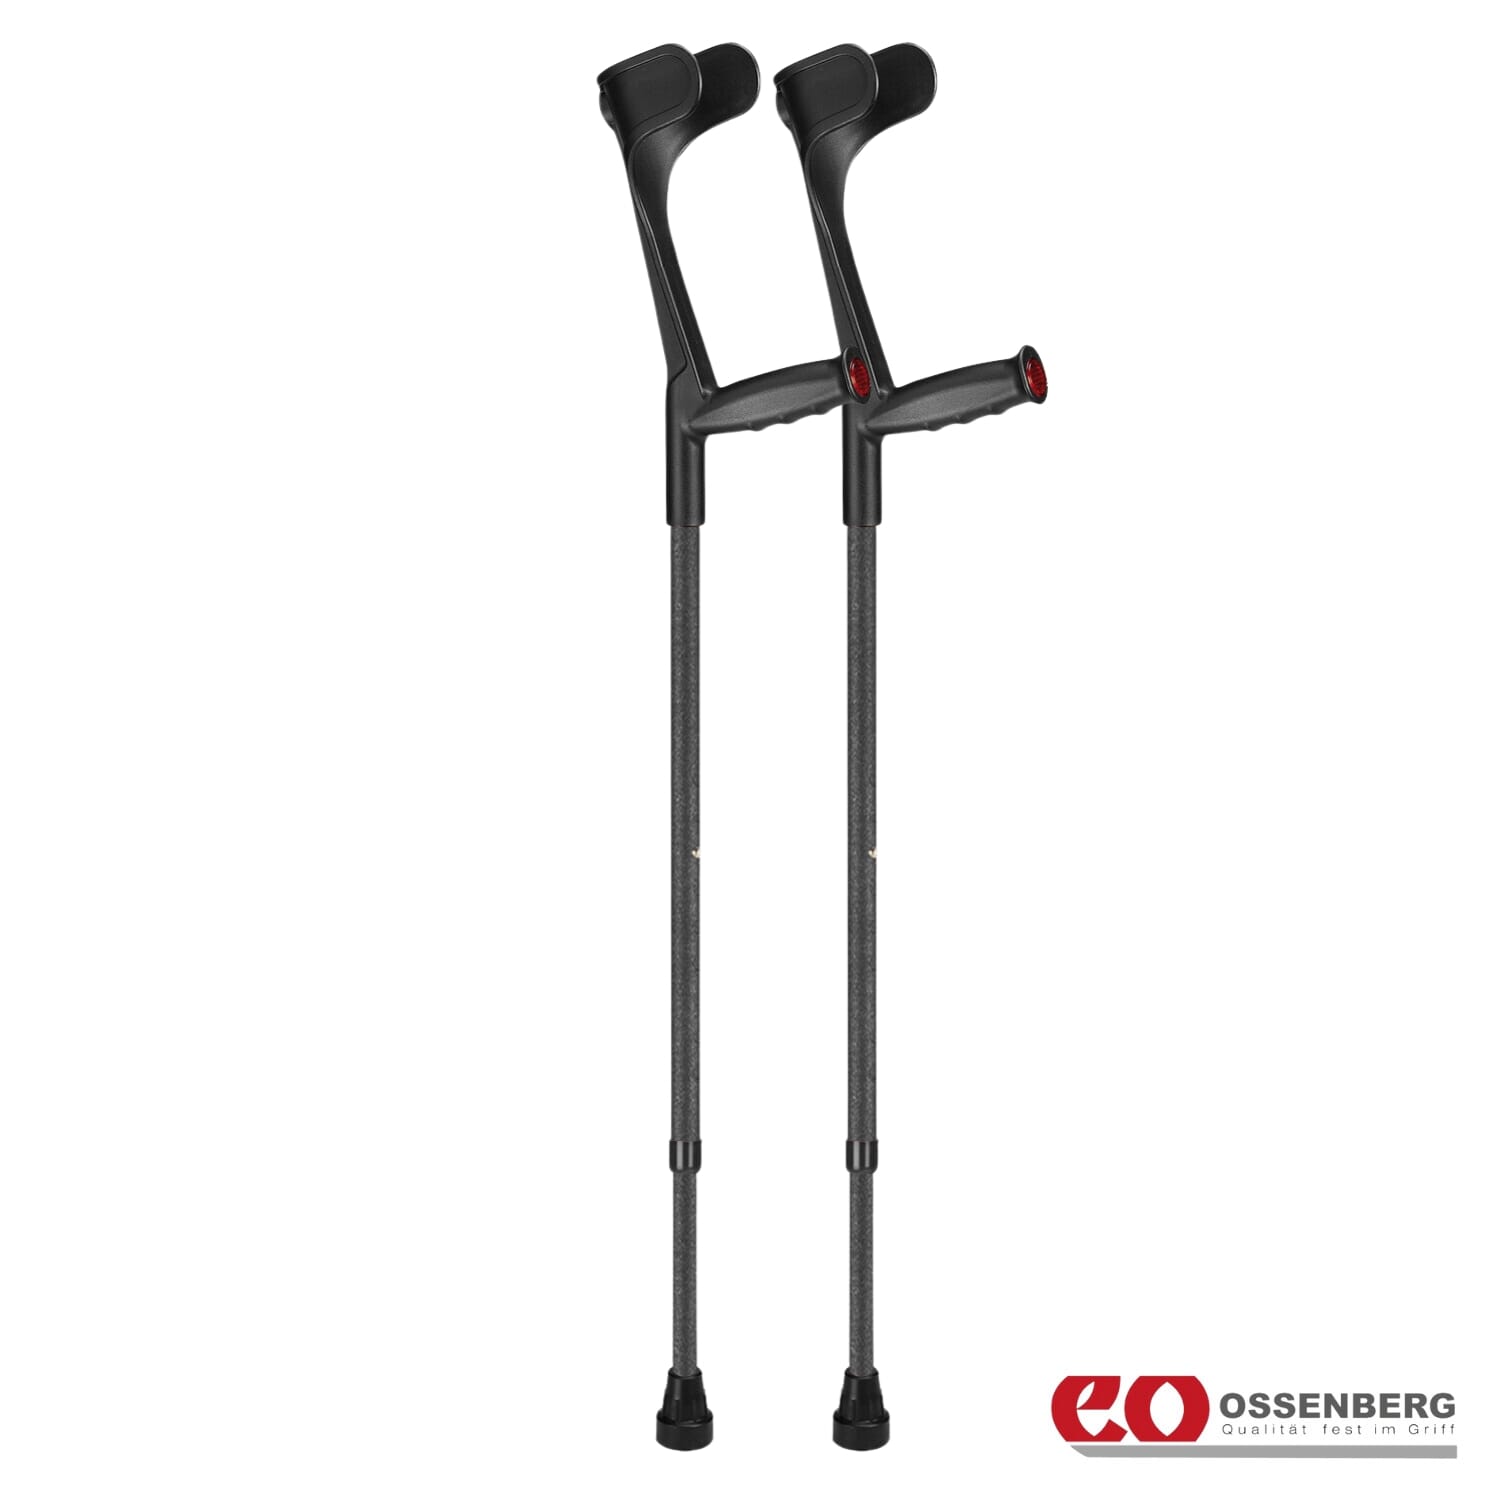 View Ossenberg Open Cuff Soft Grip Crutches Black Pair information